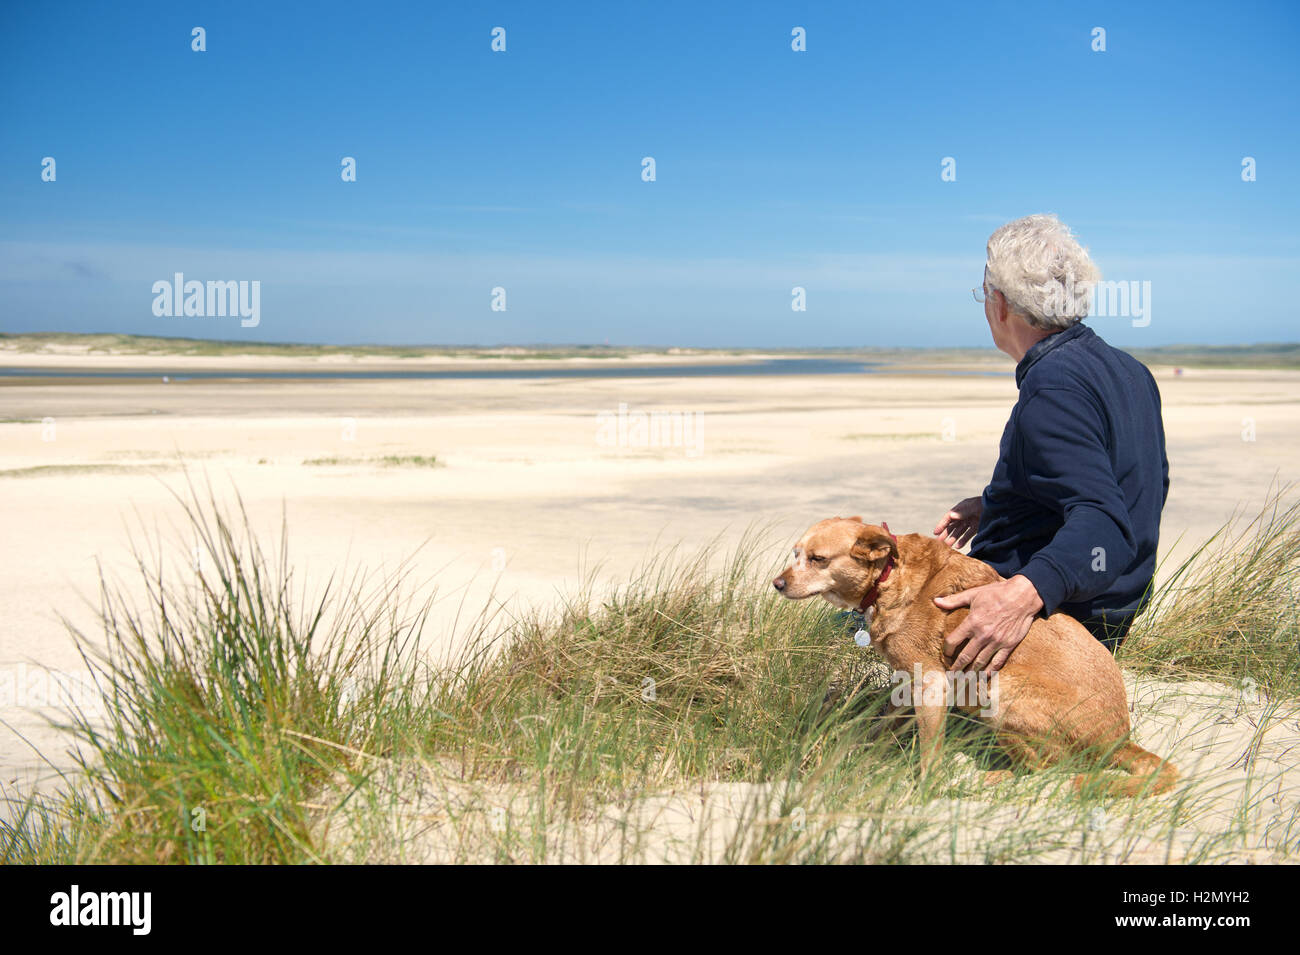 Man with dog on sand dune Stock Photo